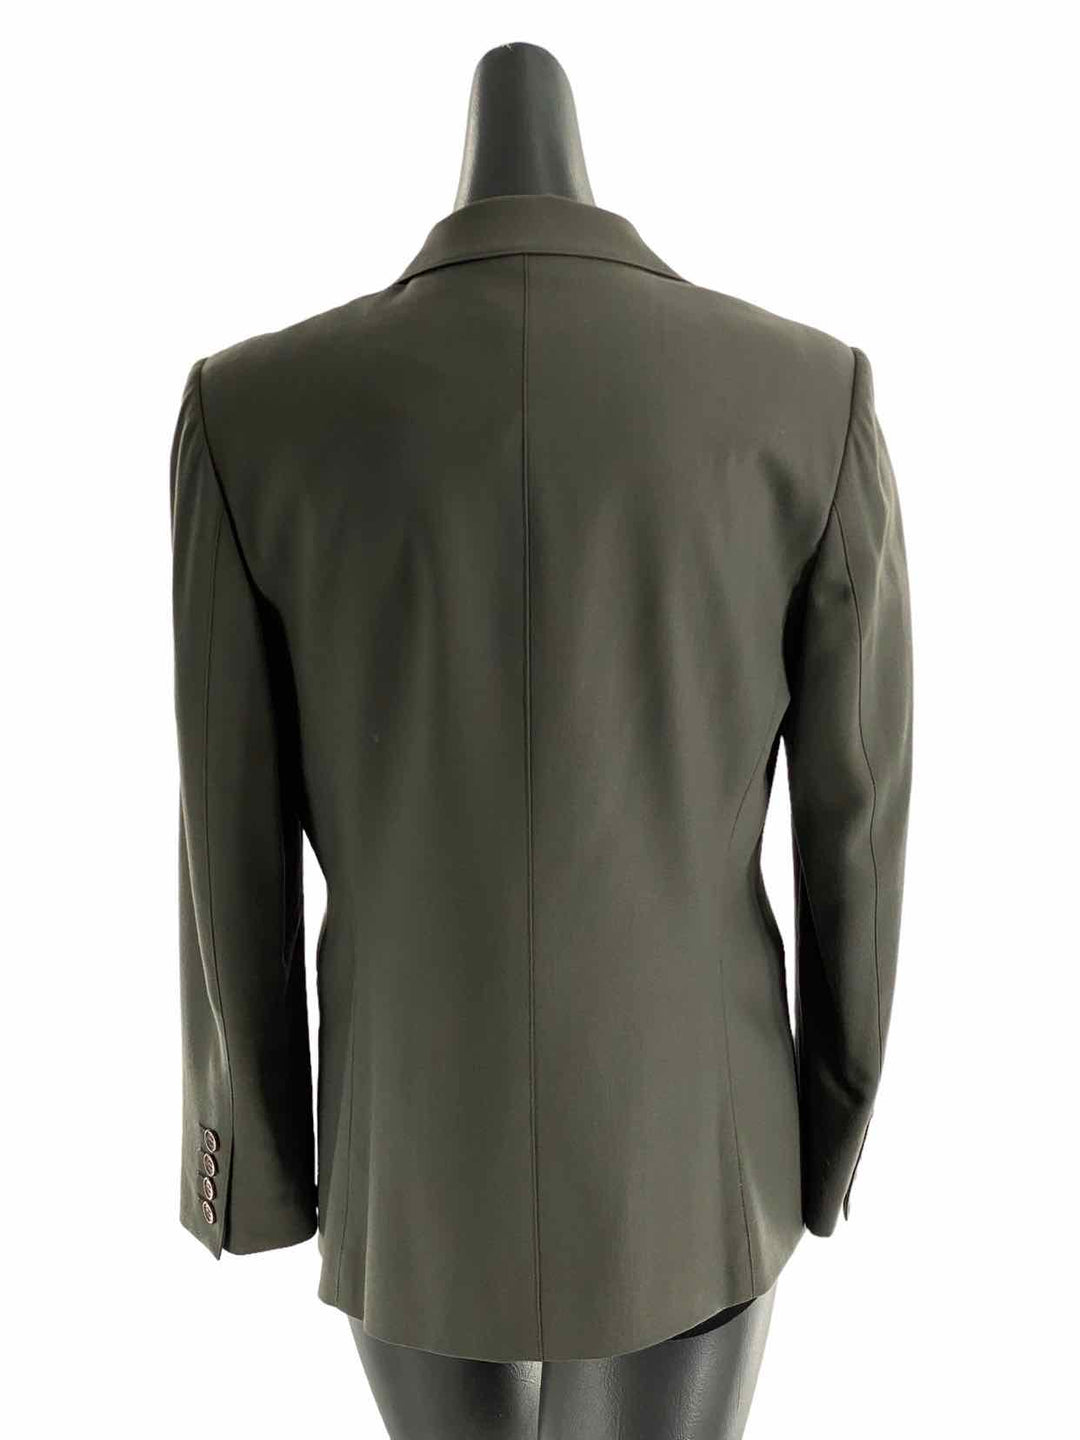 Talbots Size 6 Gray Jacket